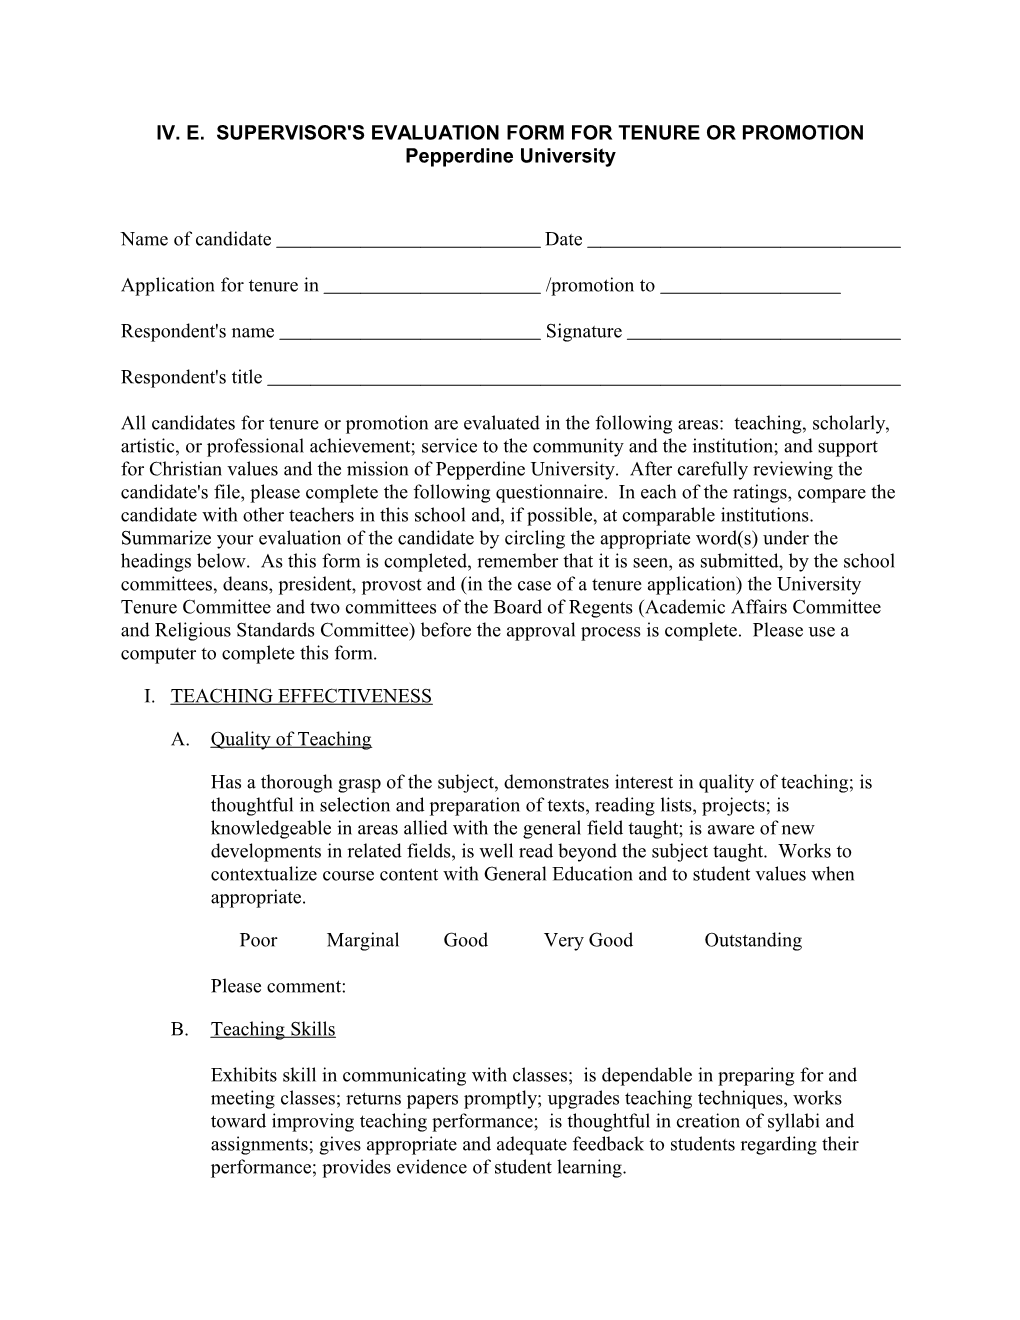 Iv. E. Supervisor's Evaluation Form for Tenure Or Promotion